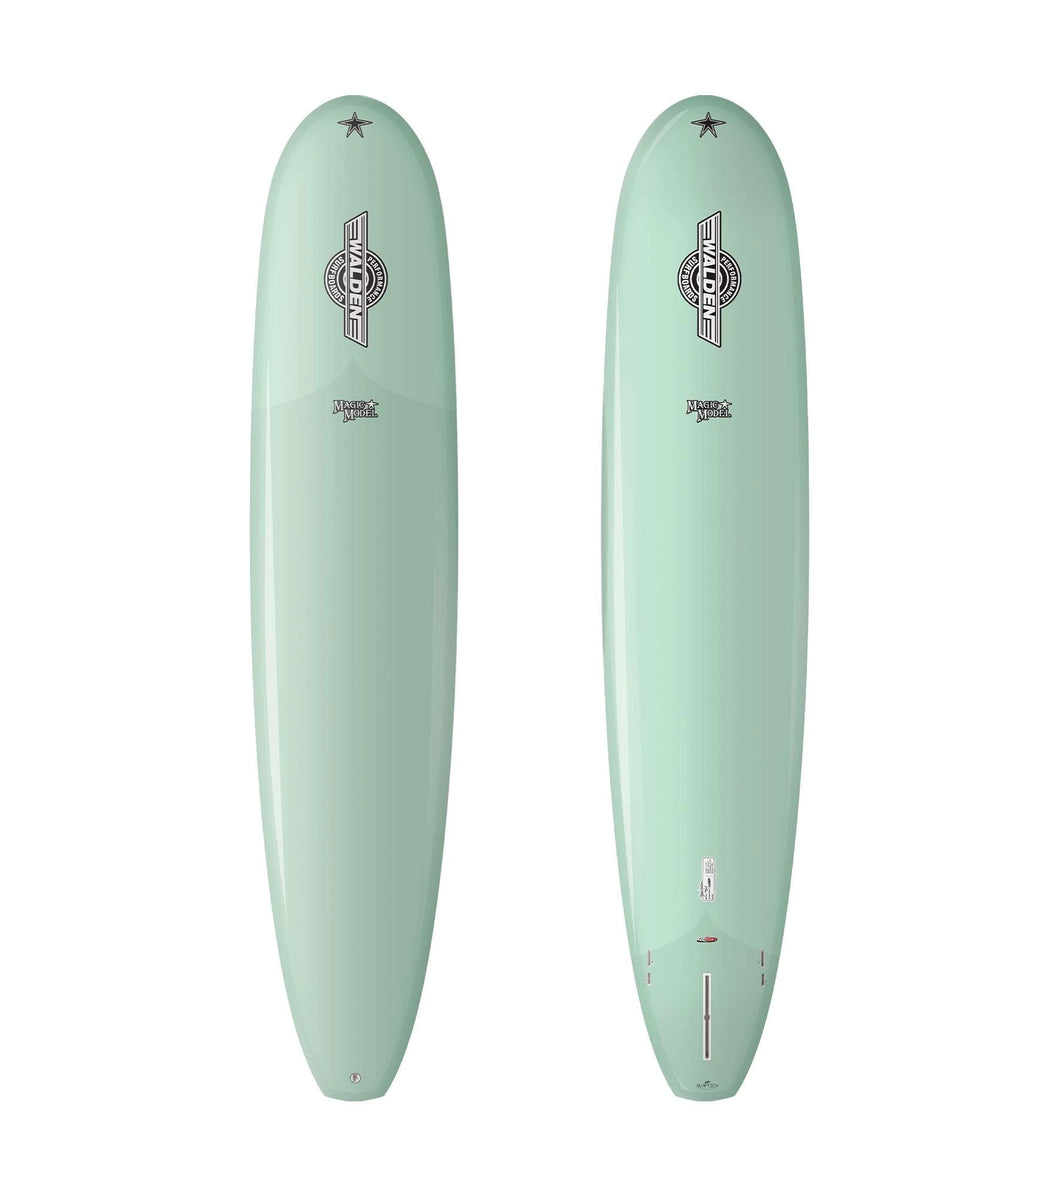 Walden Magic model 10' True Ride Surfboard